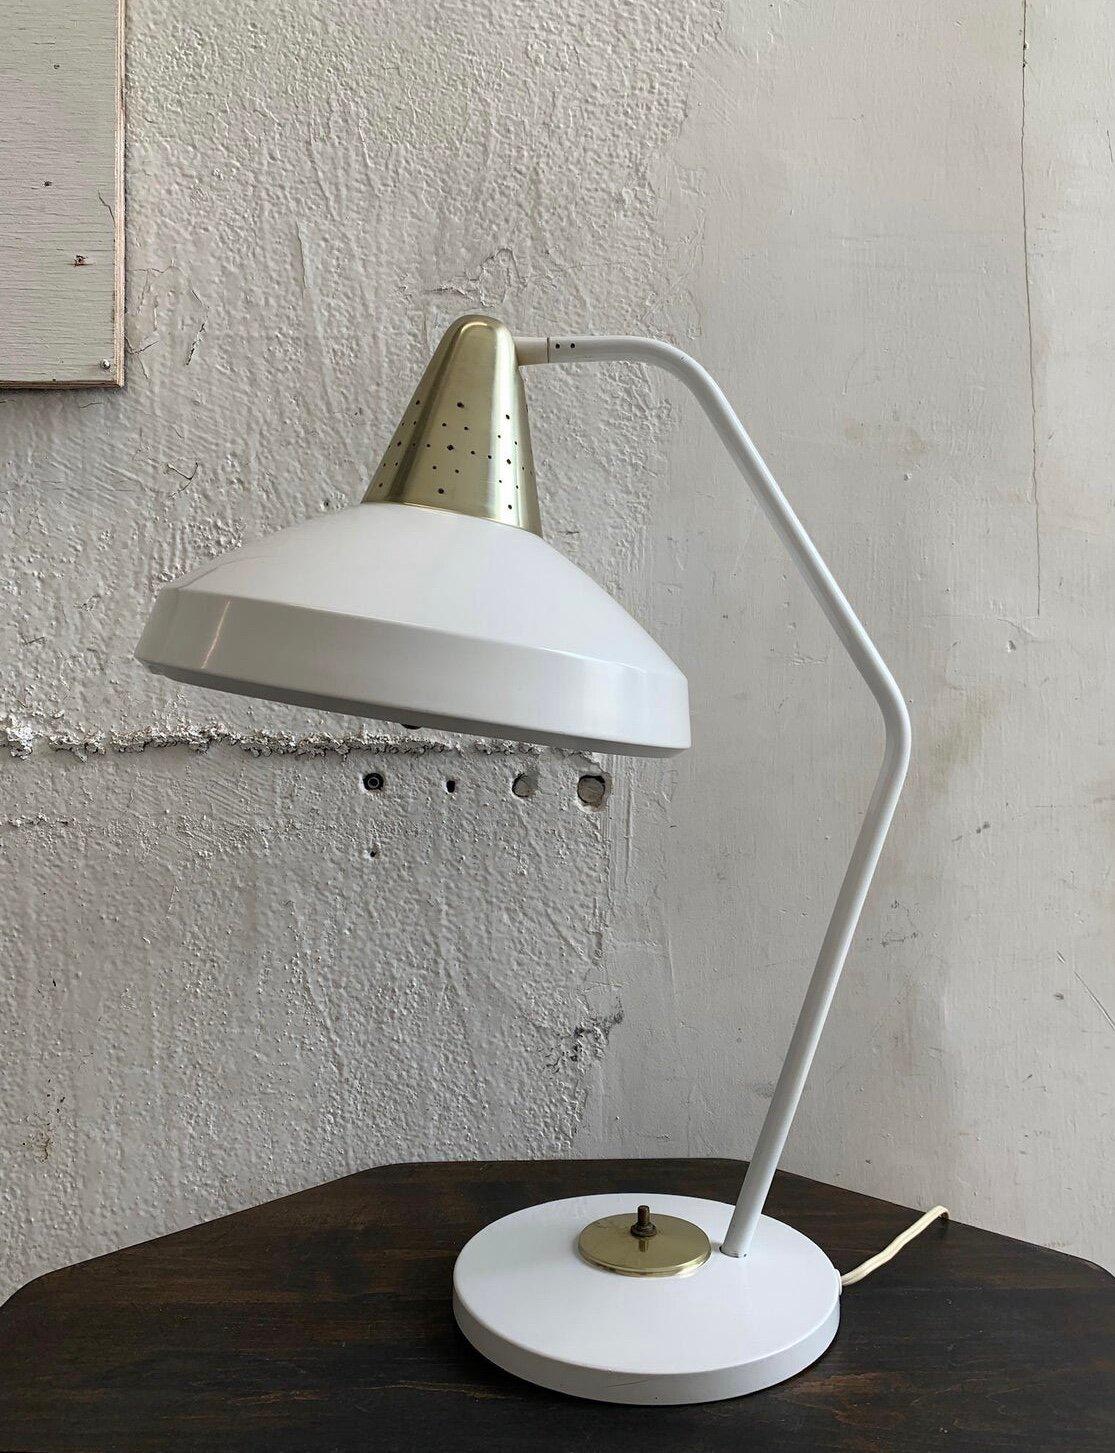 Mid-Century Modern Vintage White Metal Desk Lamp by Swivelier, Attributed to Bill Scarlett, 1960s For Sale